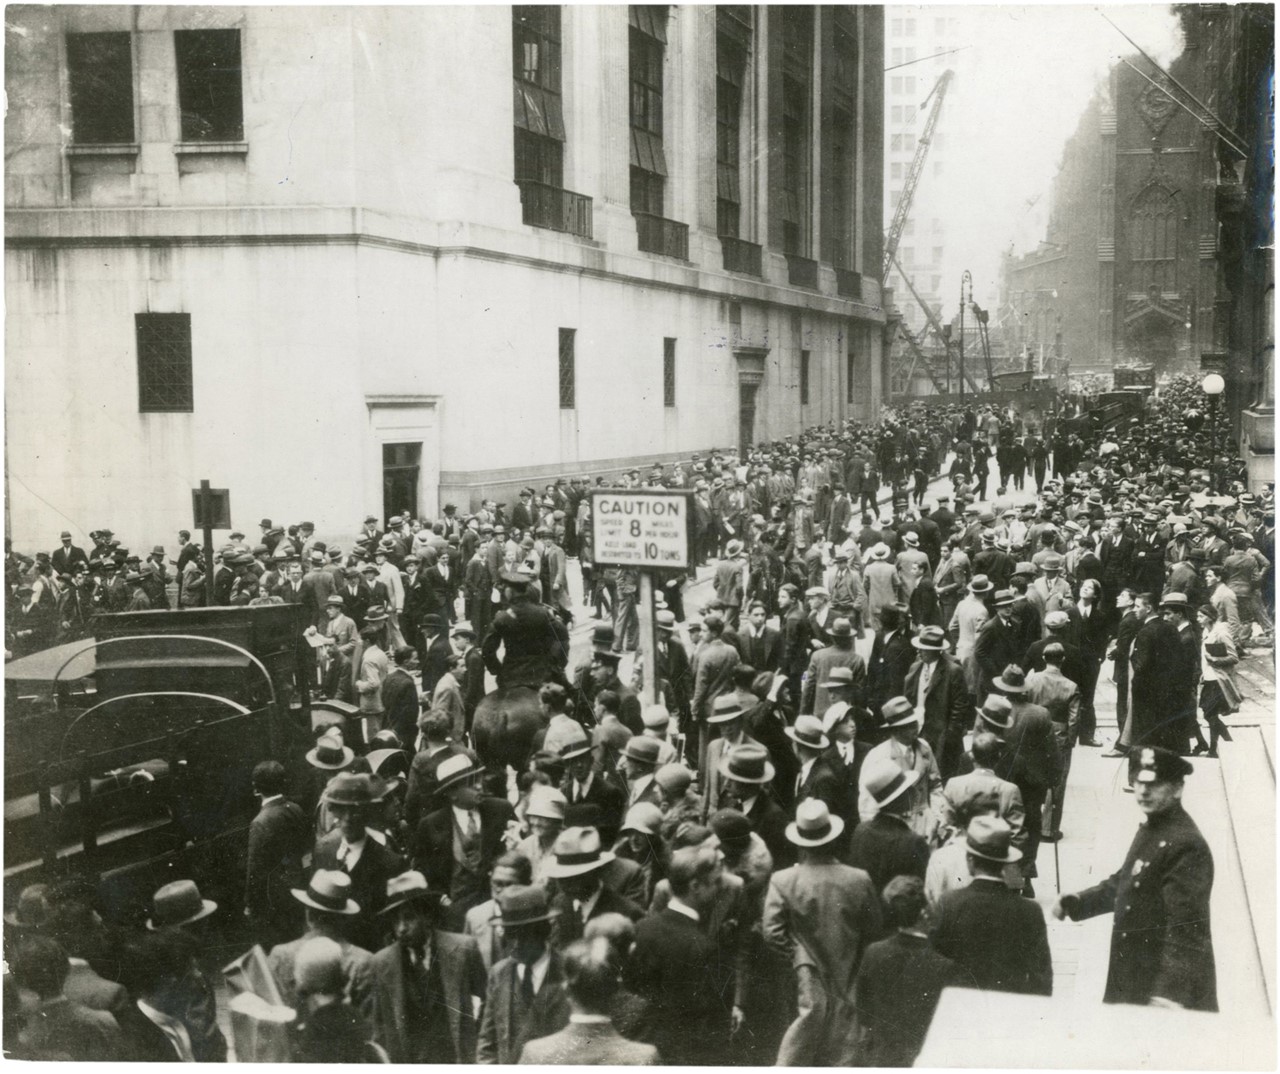 1929 Stock Market Crash on Wall Street Photograph